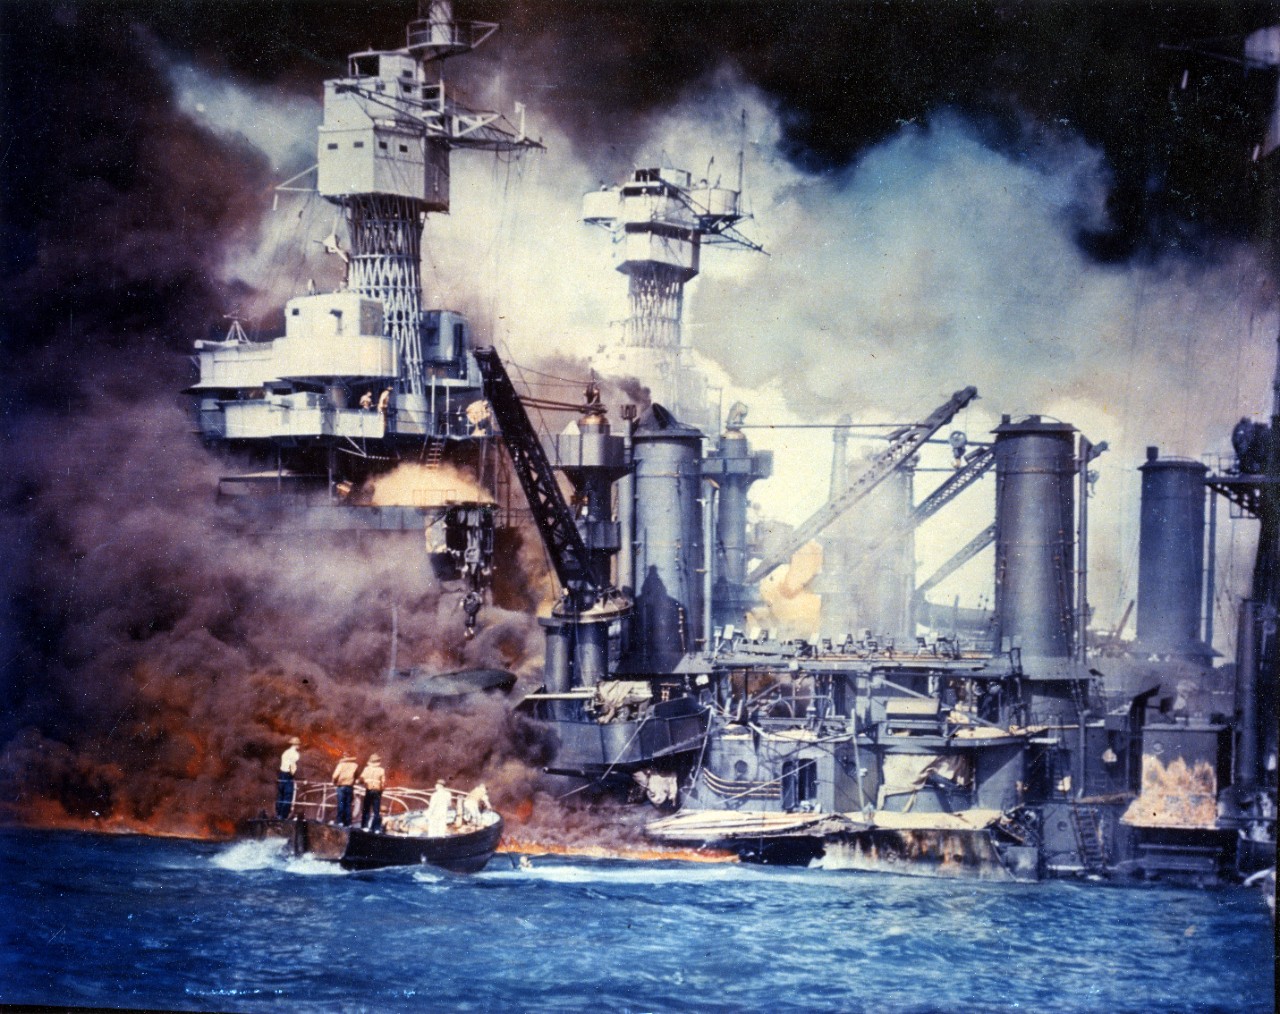 Photo #: USA C-5904 Pearl Harbor Attack, 7 December 1941 Note: